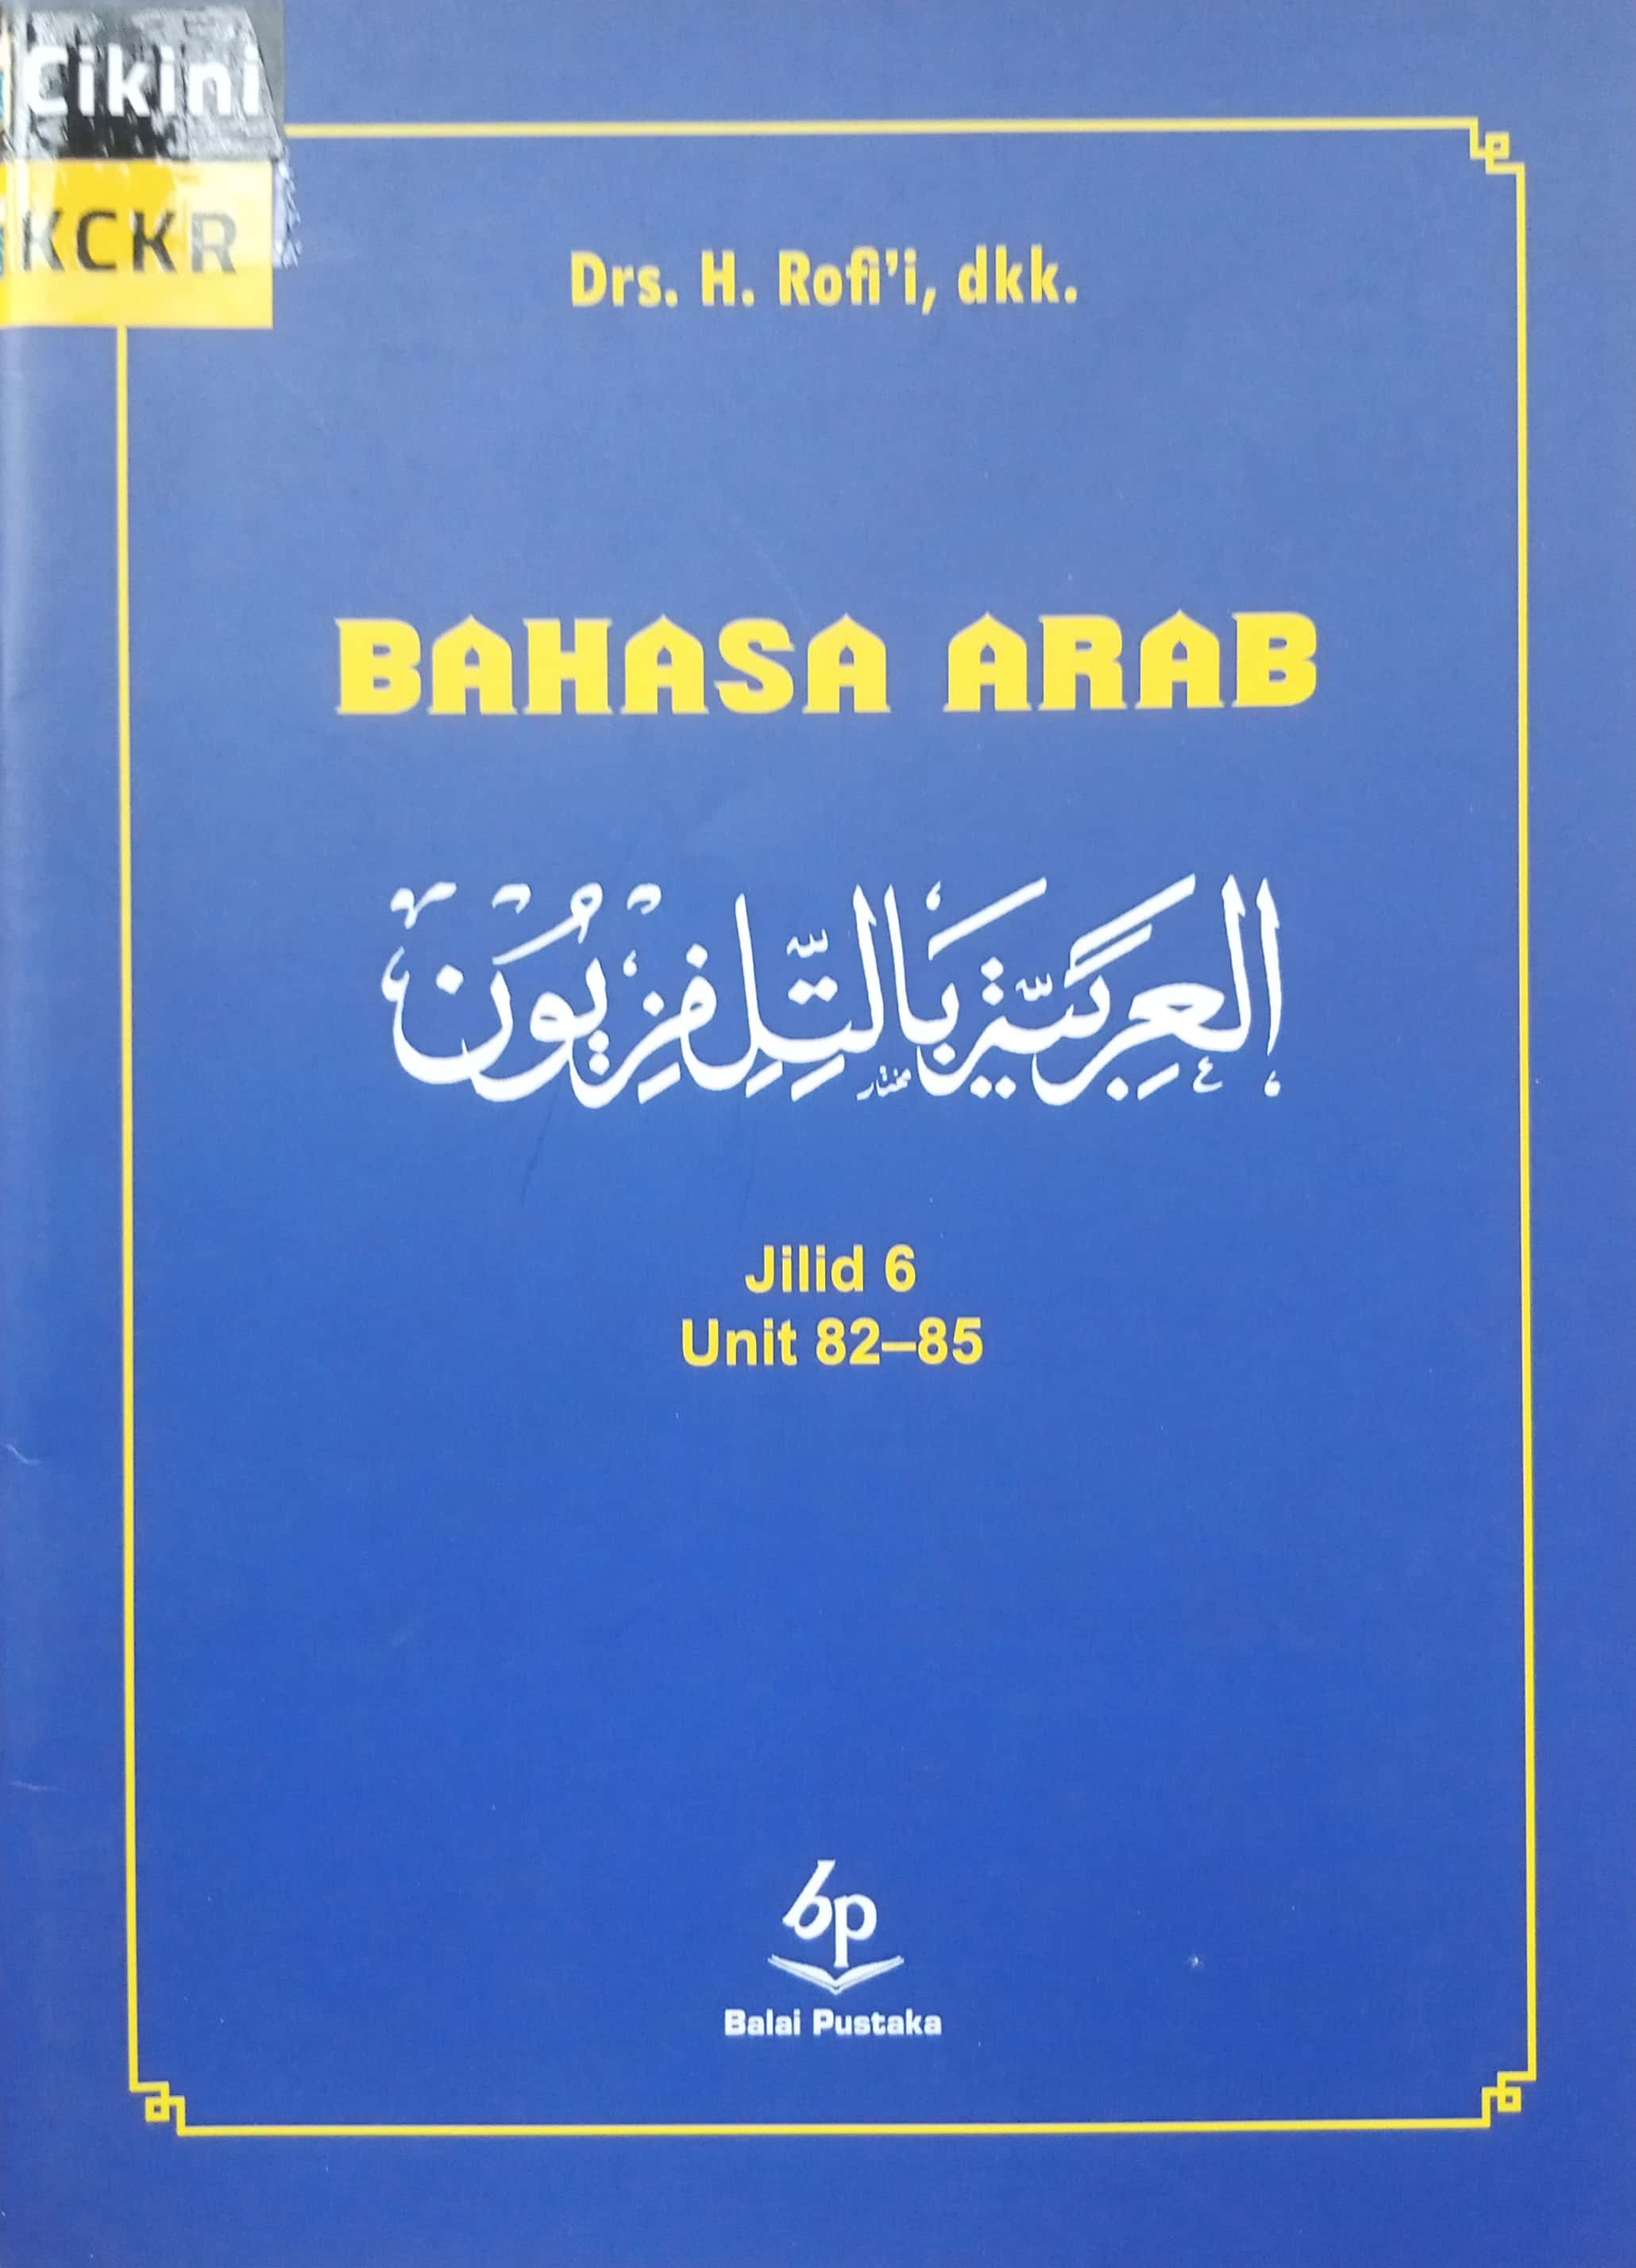 Bahasa Arab jilid 6 unit 82-85